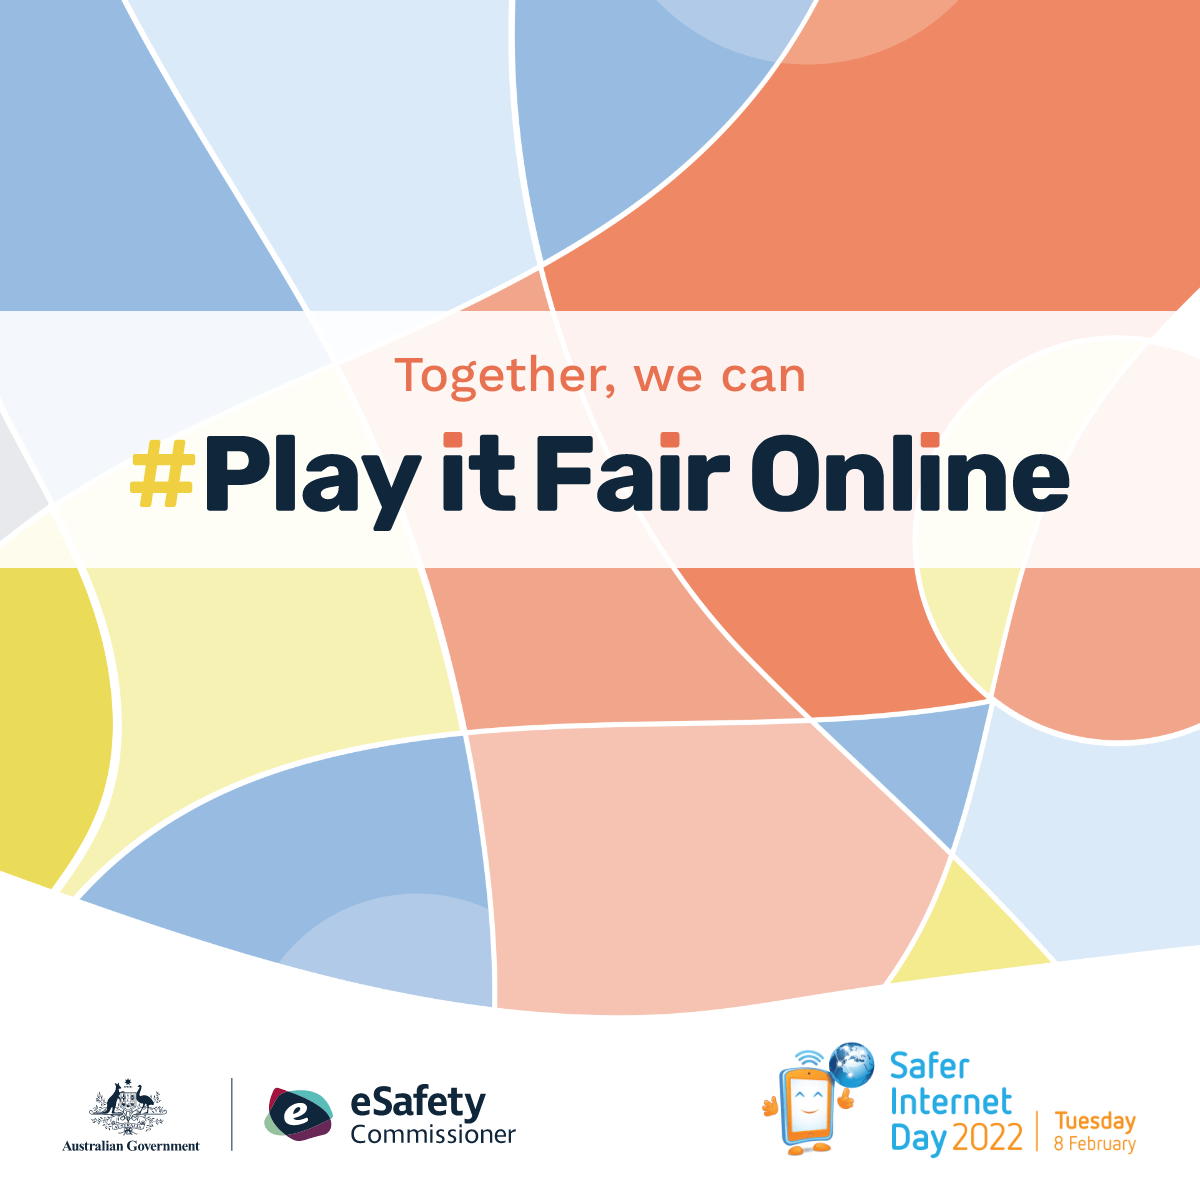 Play is fair online